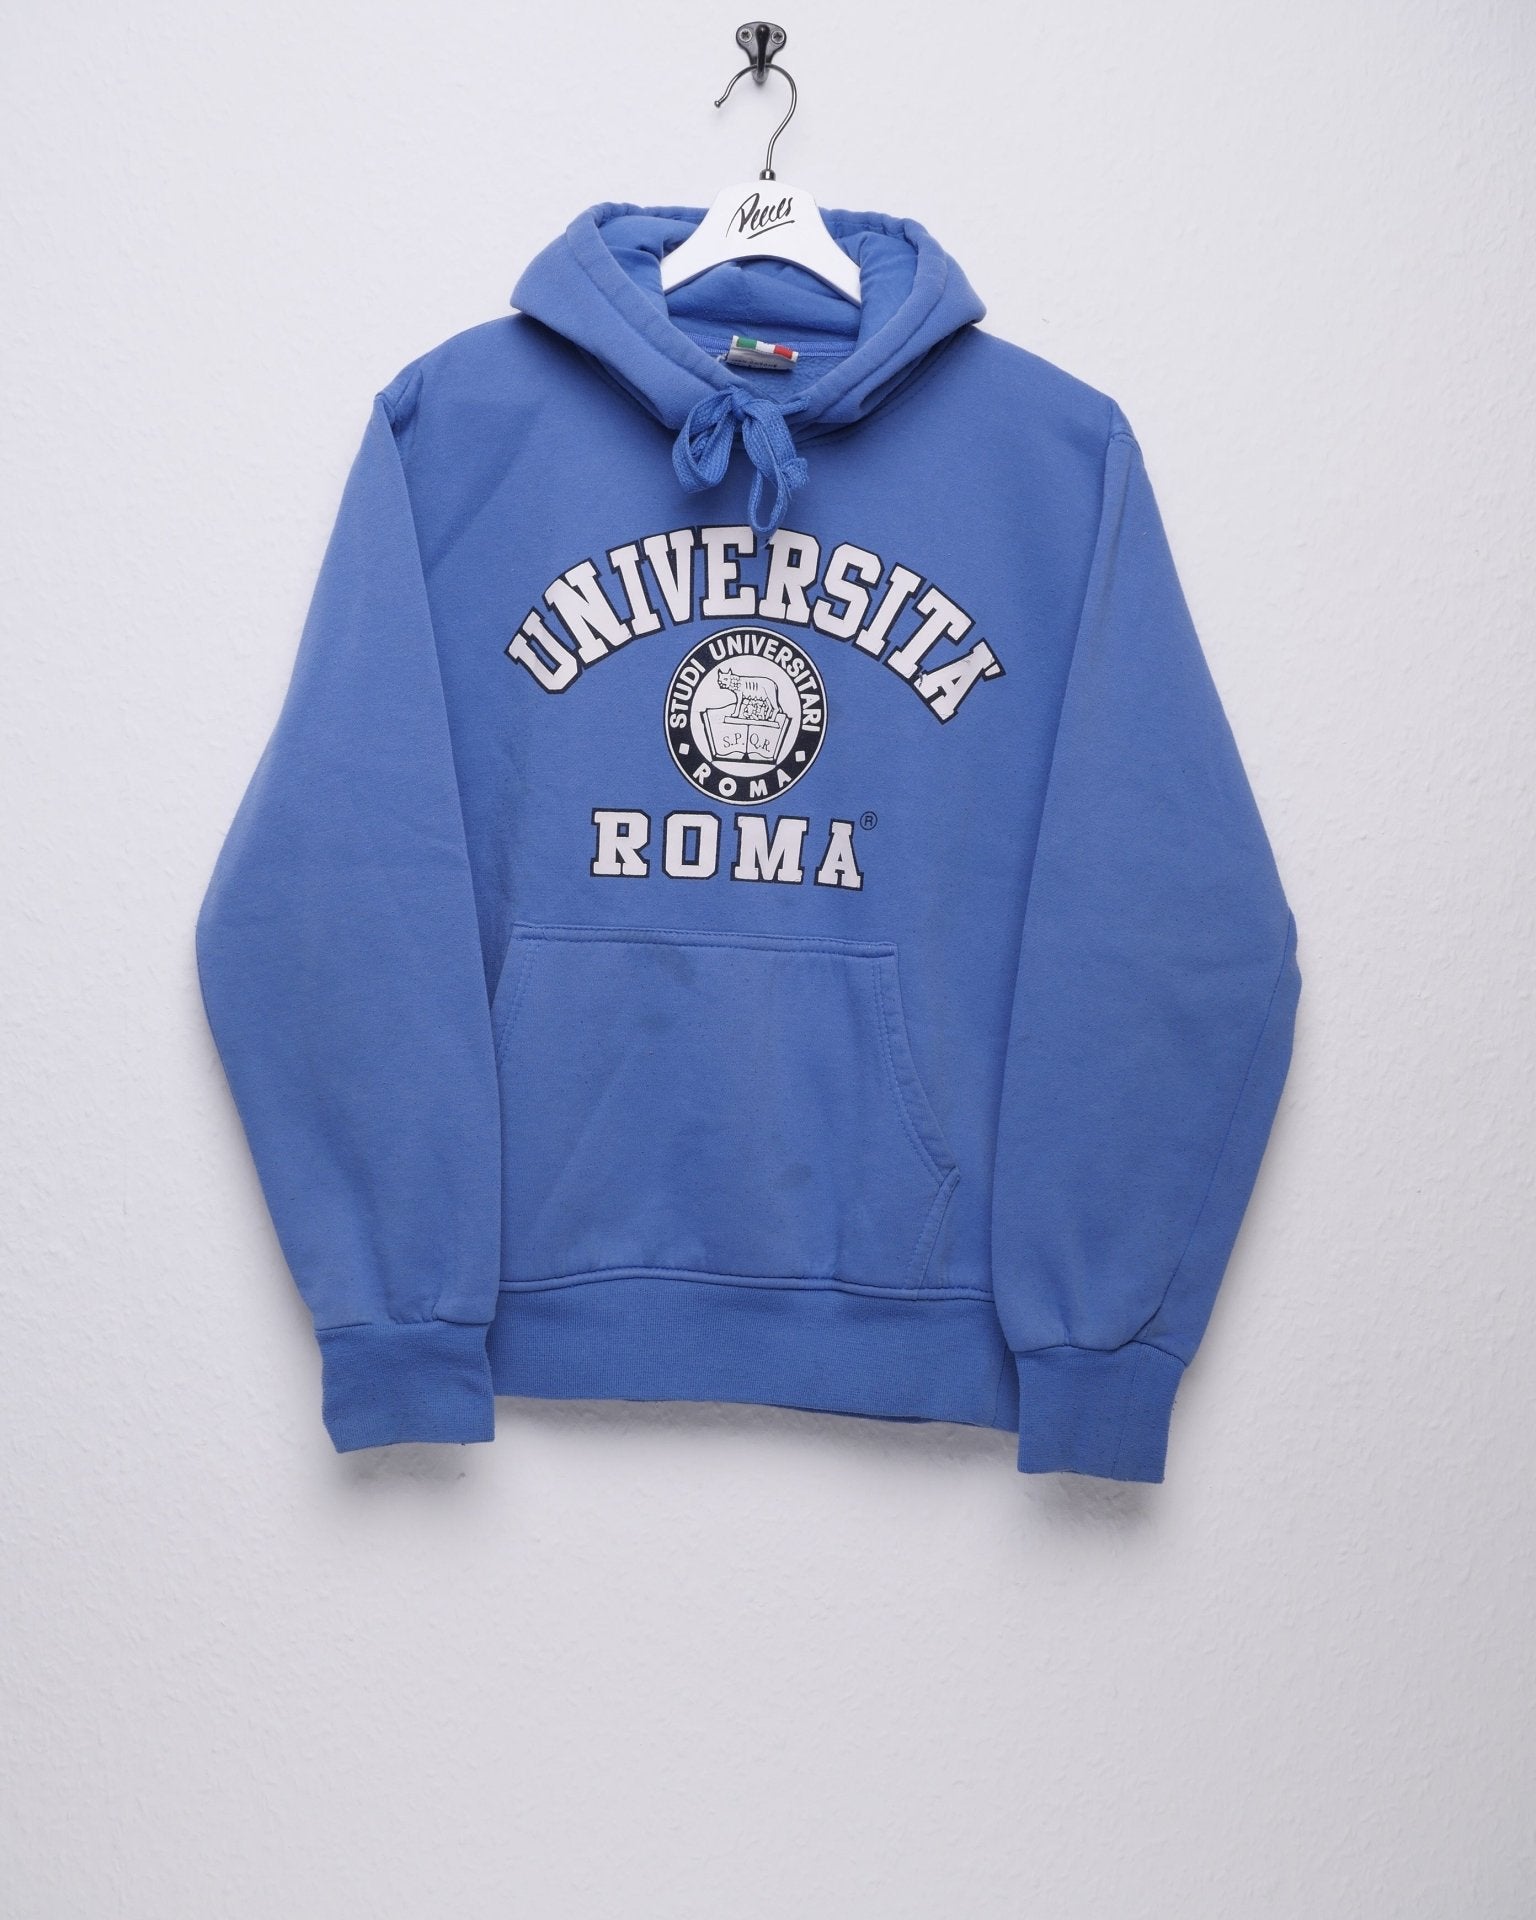 Vintage printed 'Universita Roma' Hoodie - Peeces